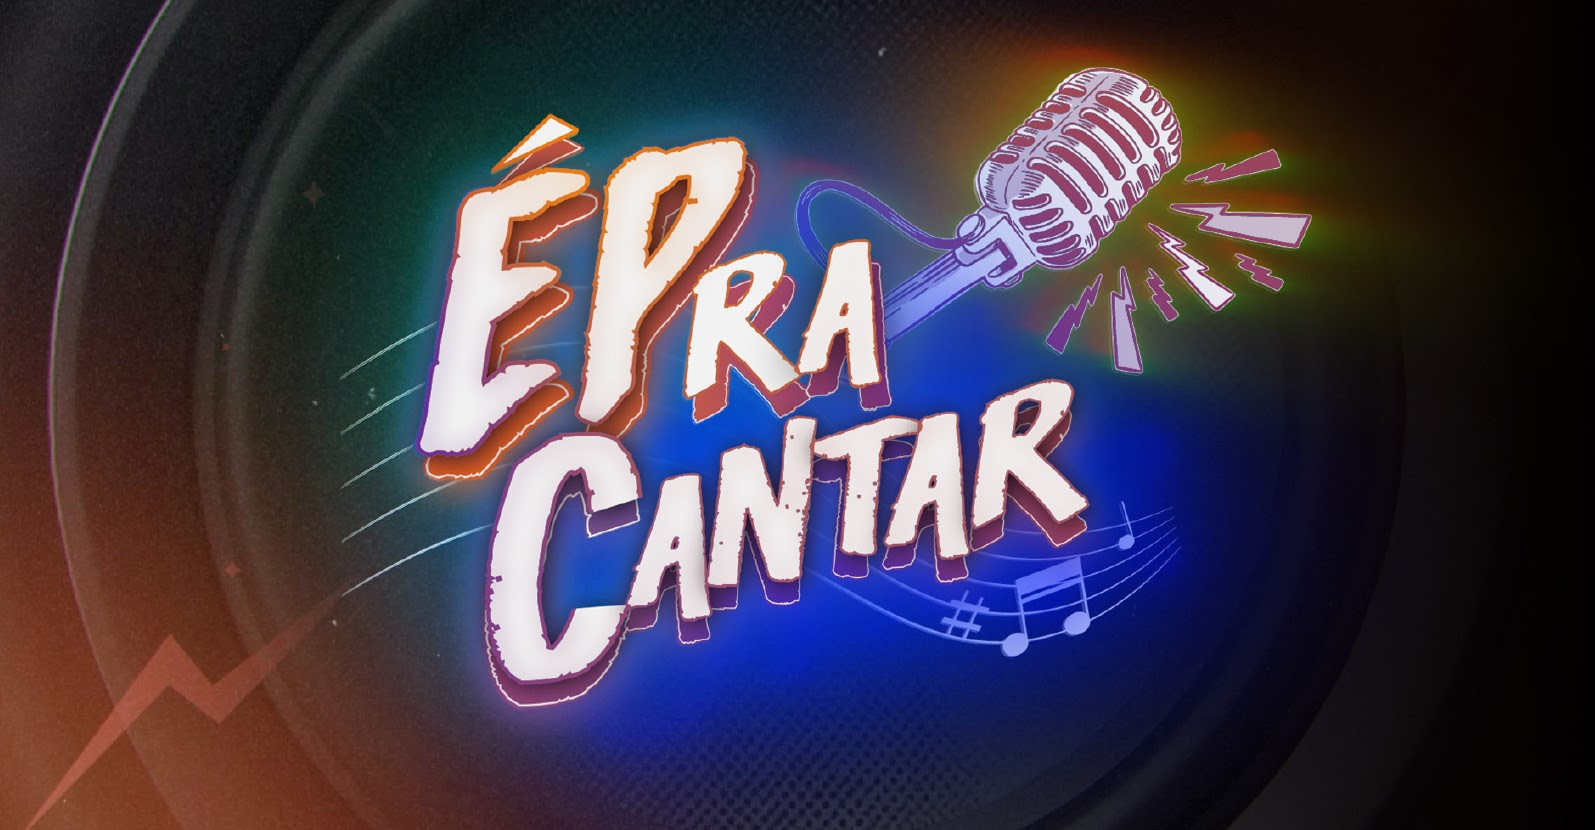 ÉPraCantar: Grupo EP lança concurso musical de Pop Rock, projeto inédito e multiplataforma